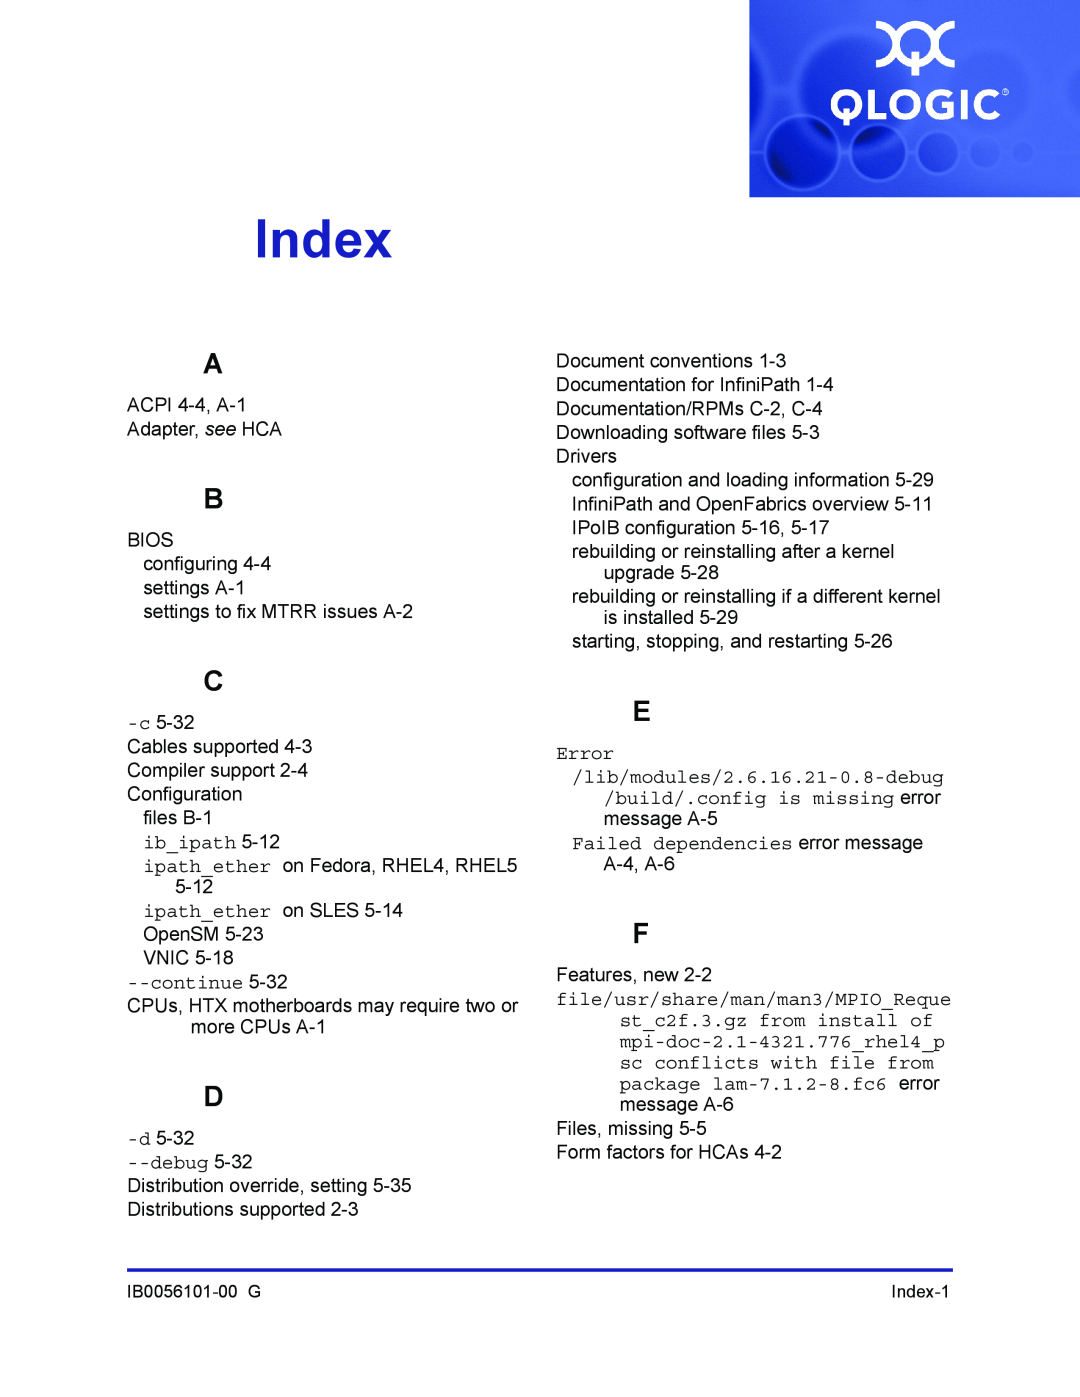 Q-Logic IB0056101-00 G manual Index 